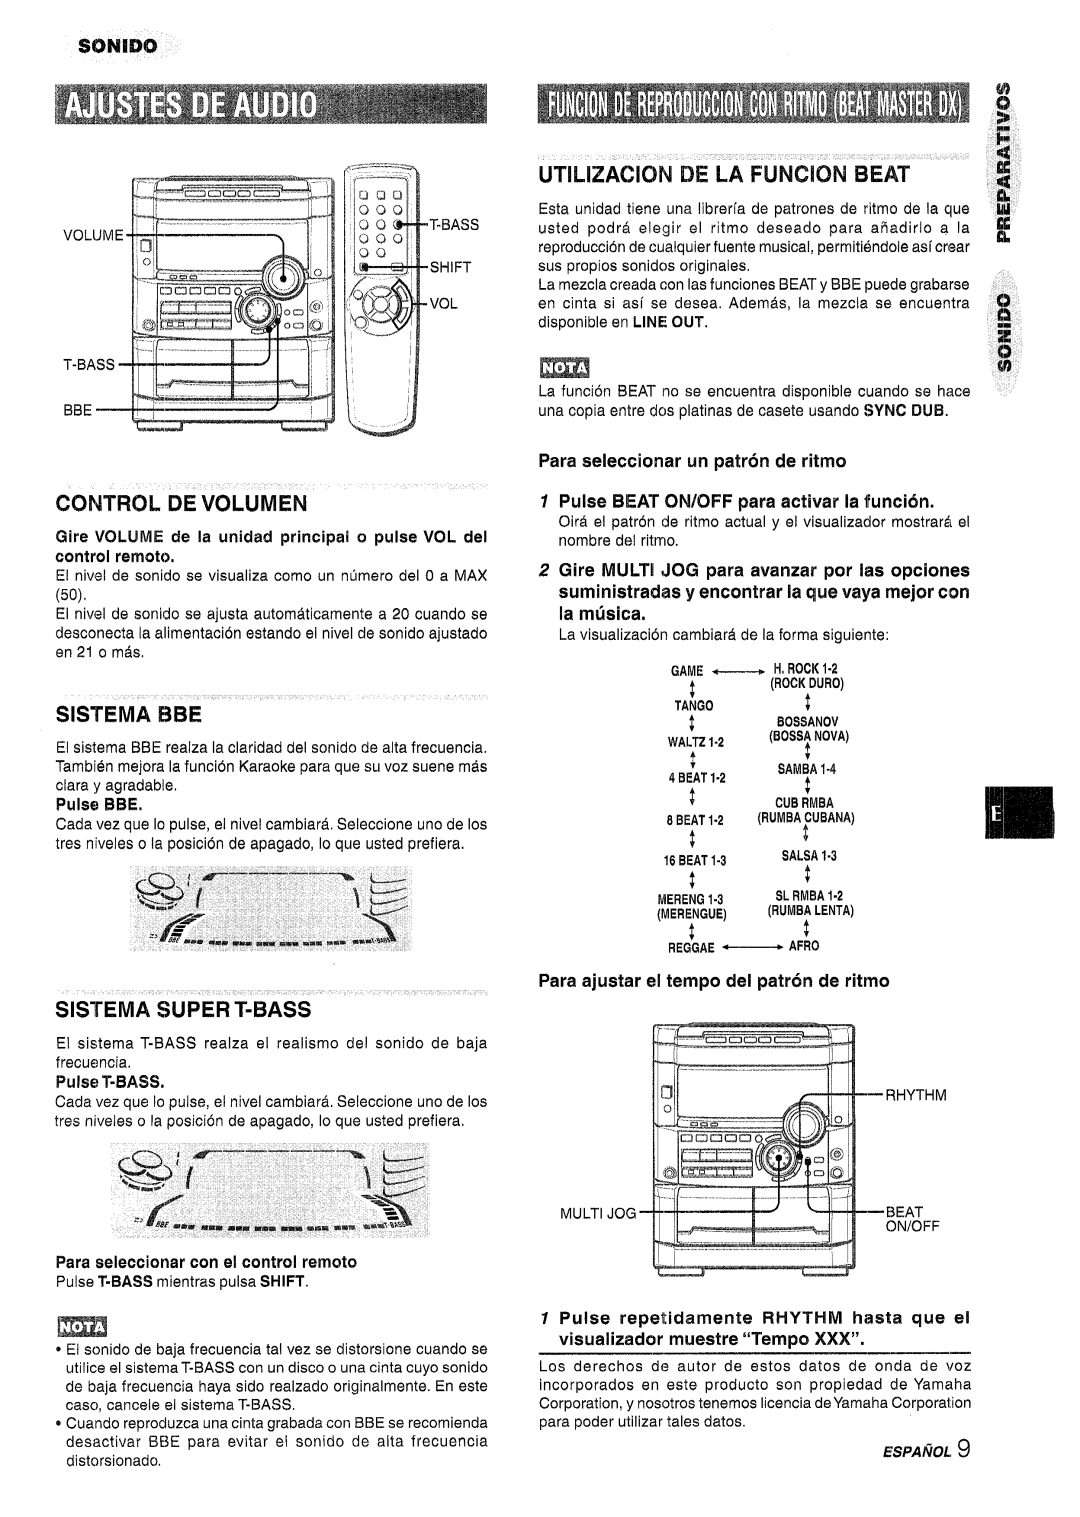 Sony NSX-A767 ~~~+--Ii, Pulse T-BASS, Control De Volumen, Utilization, De La Funcion Beat, SISTfEMA BBE, Pulse 1313E” 